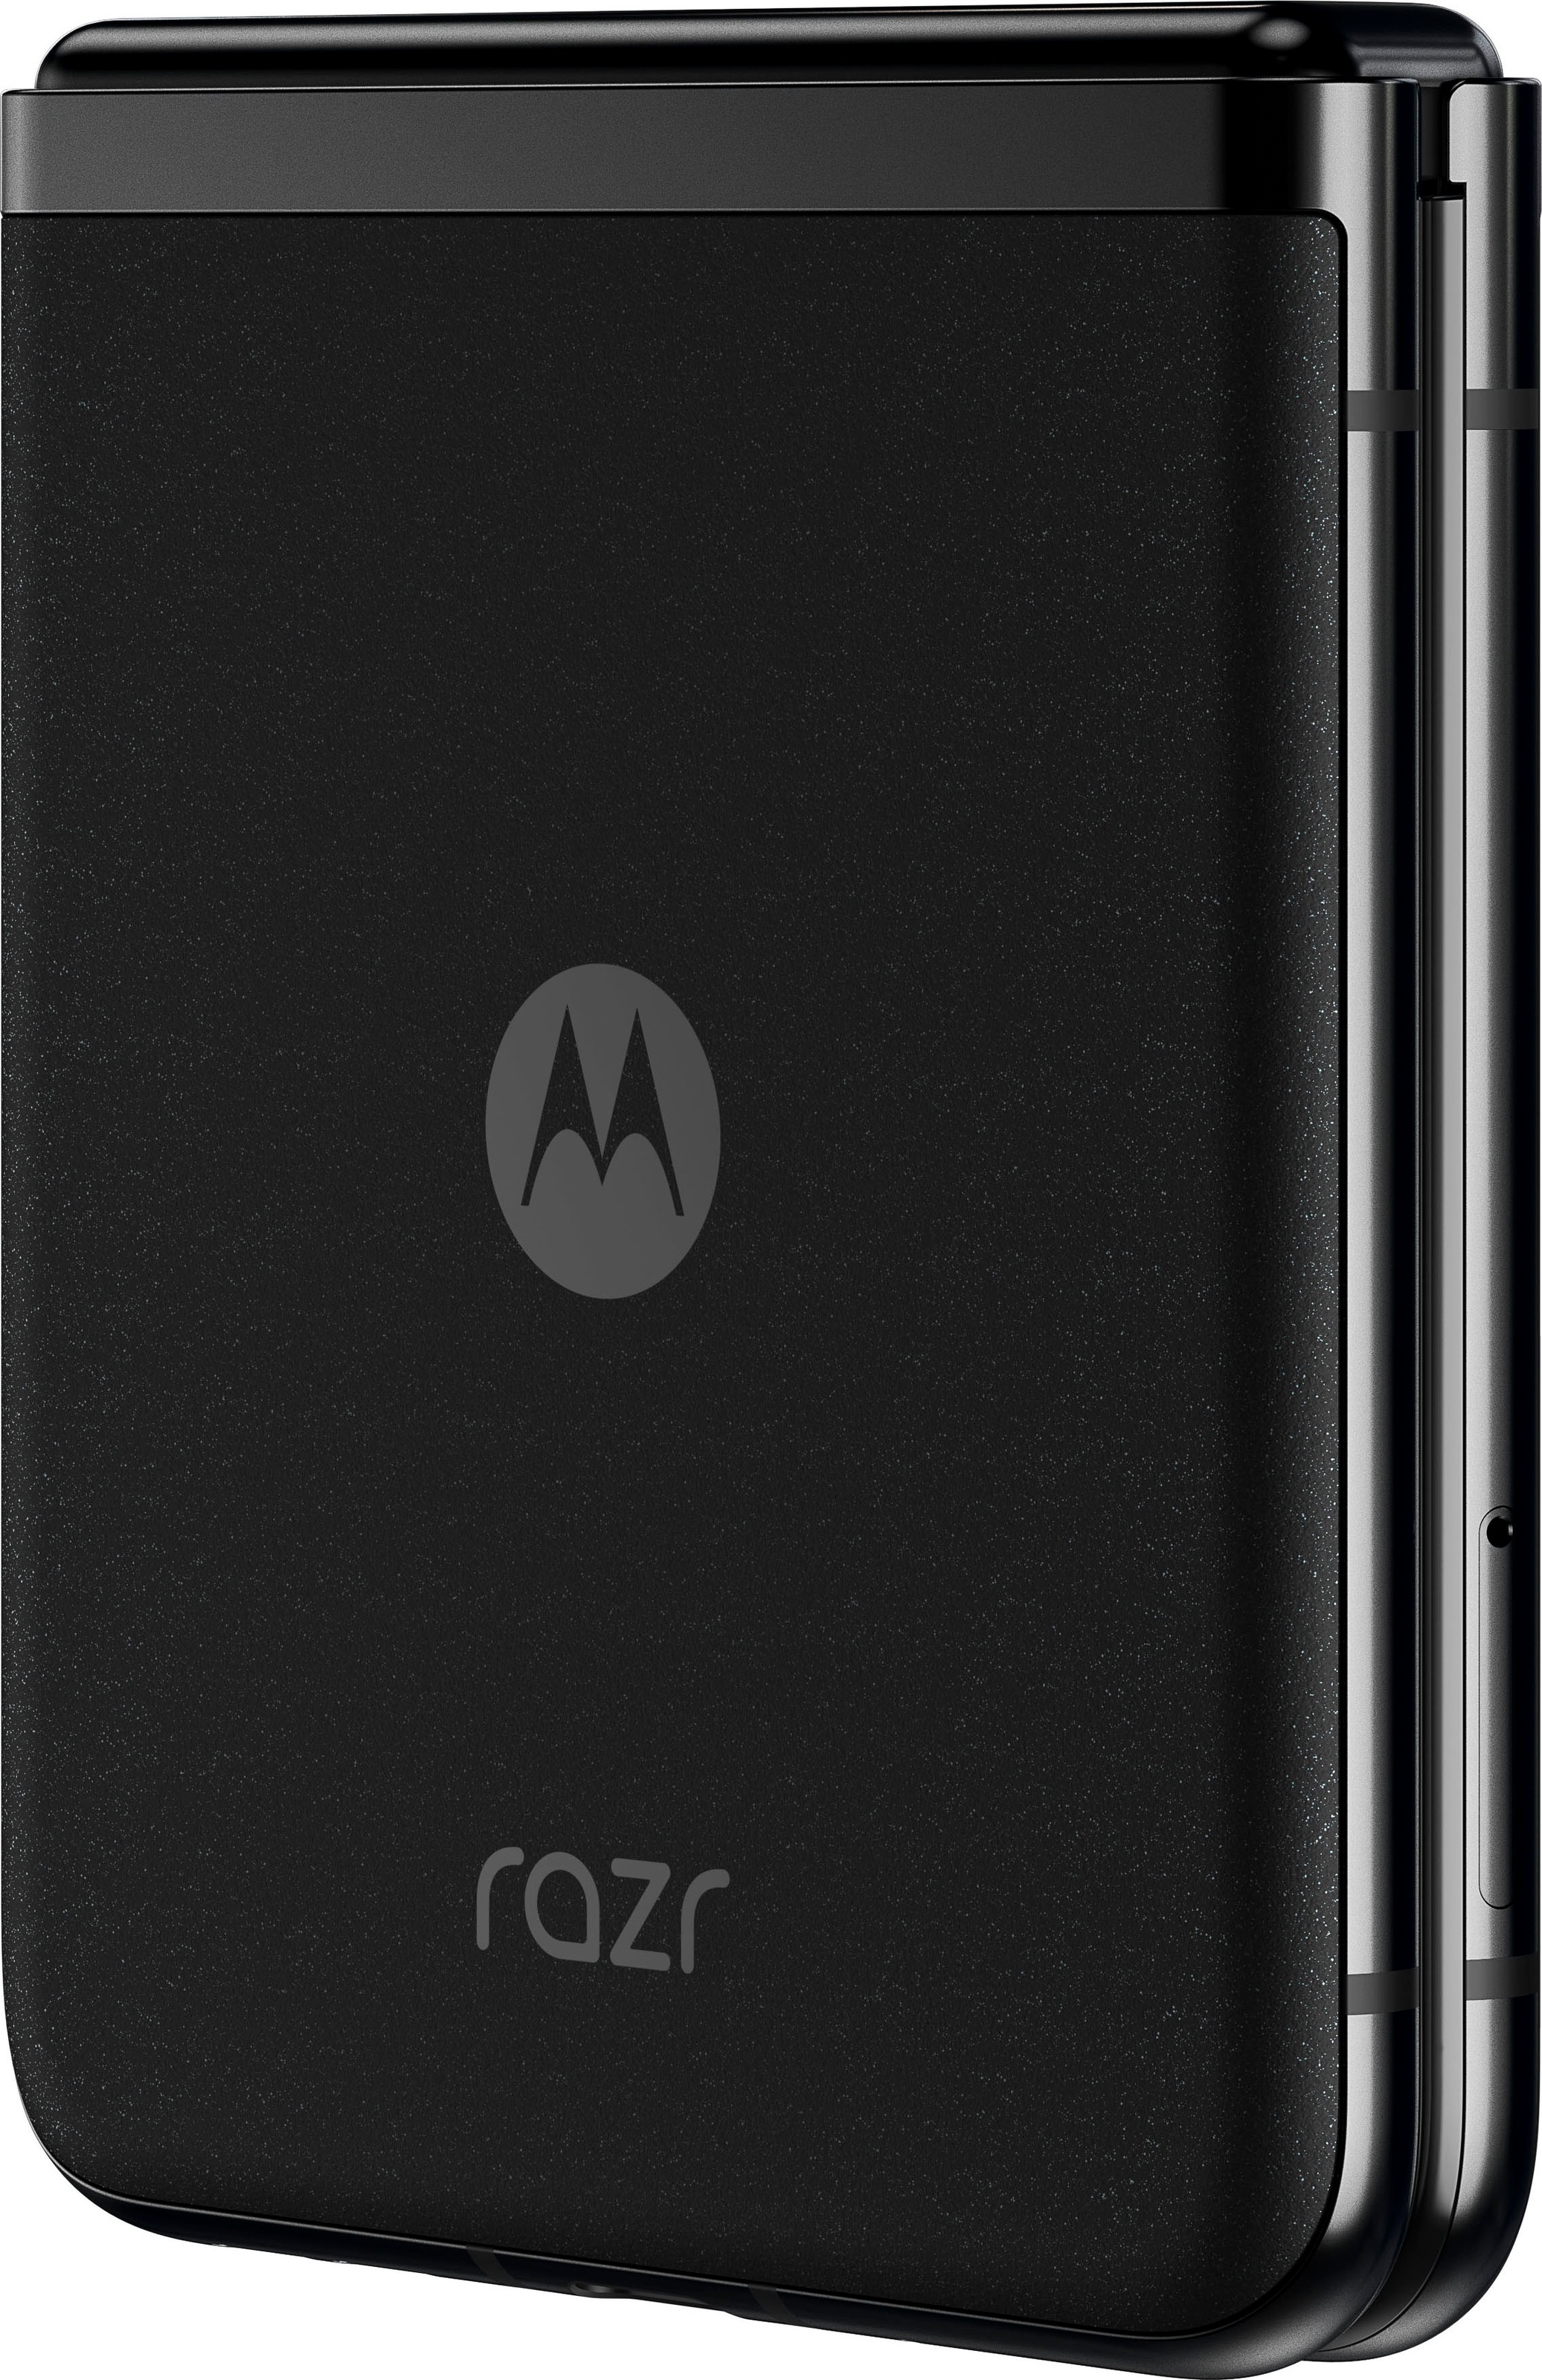 Motorola Smartphone »Motorola razr40 ultra«, Infinite Black, 17,52 cm/6,9 Zoll, 256 GB Speicherplatz, 12 MP Kamera